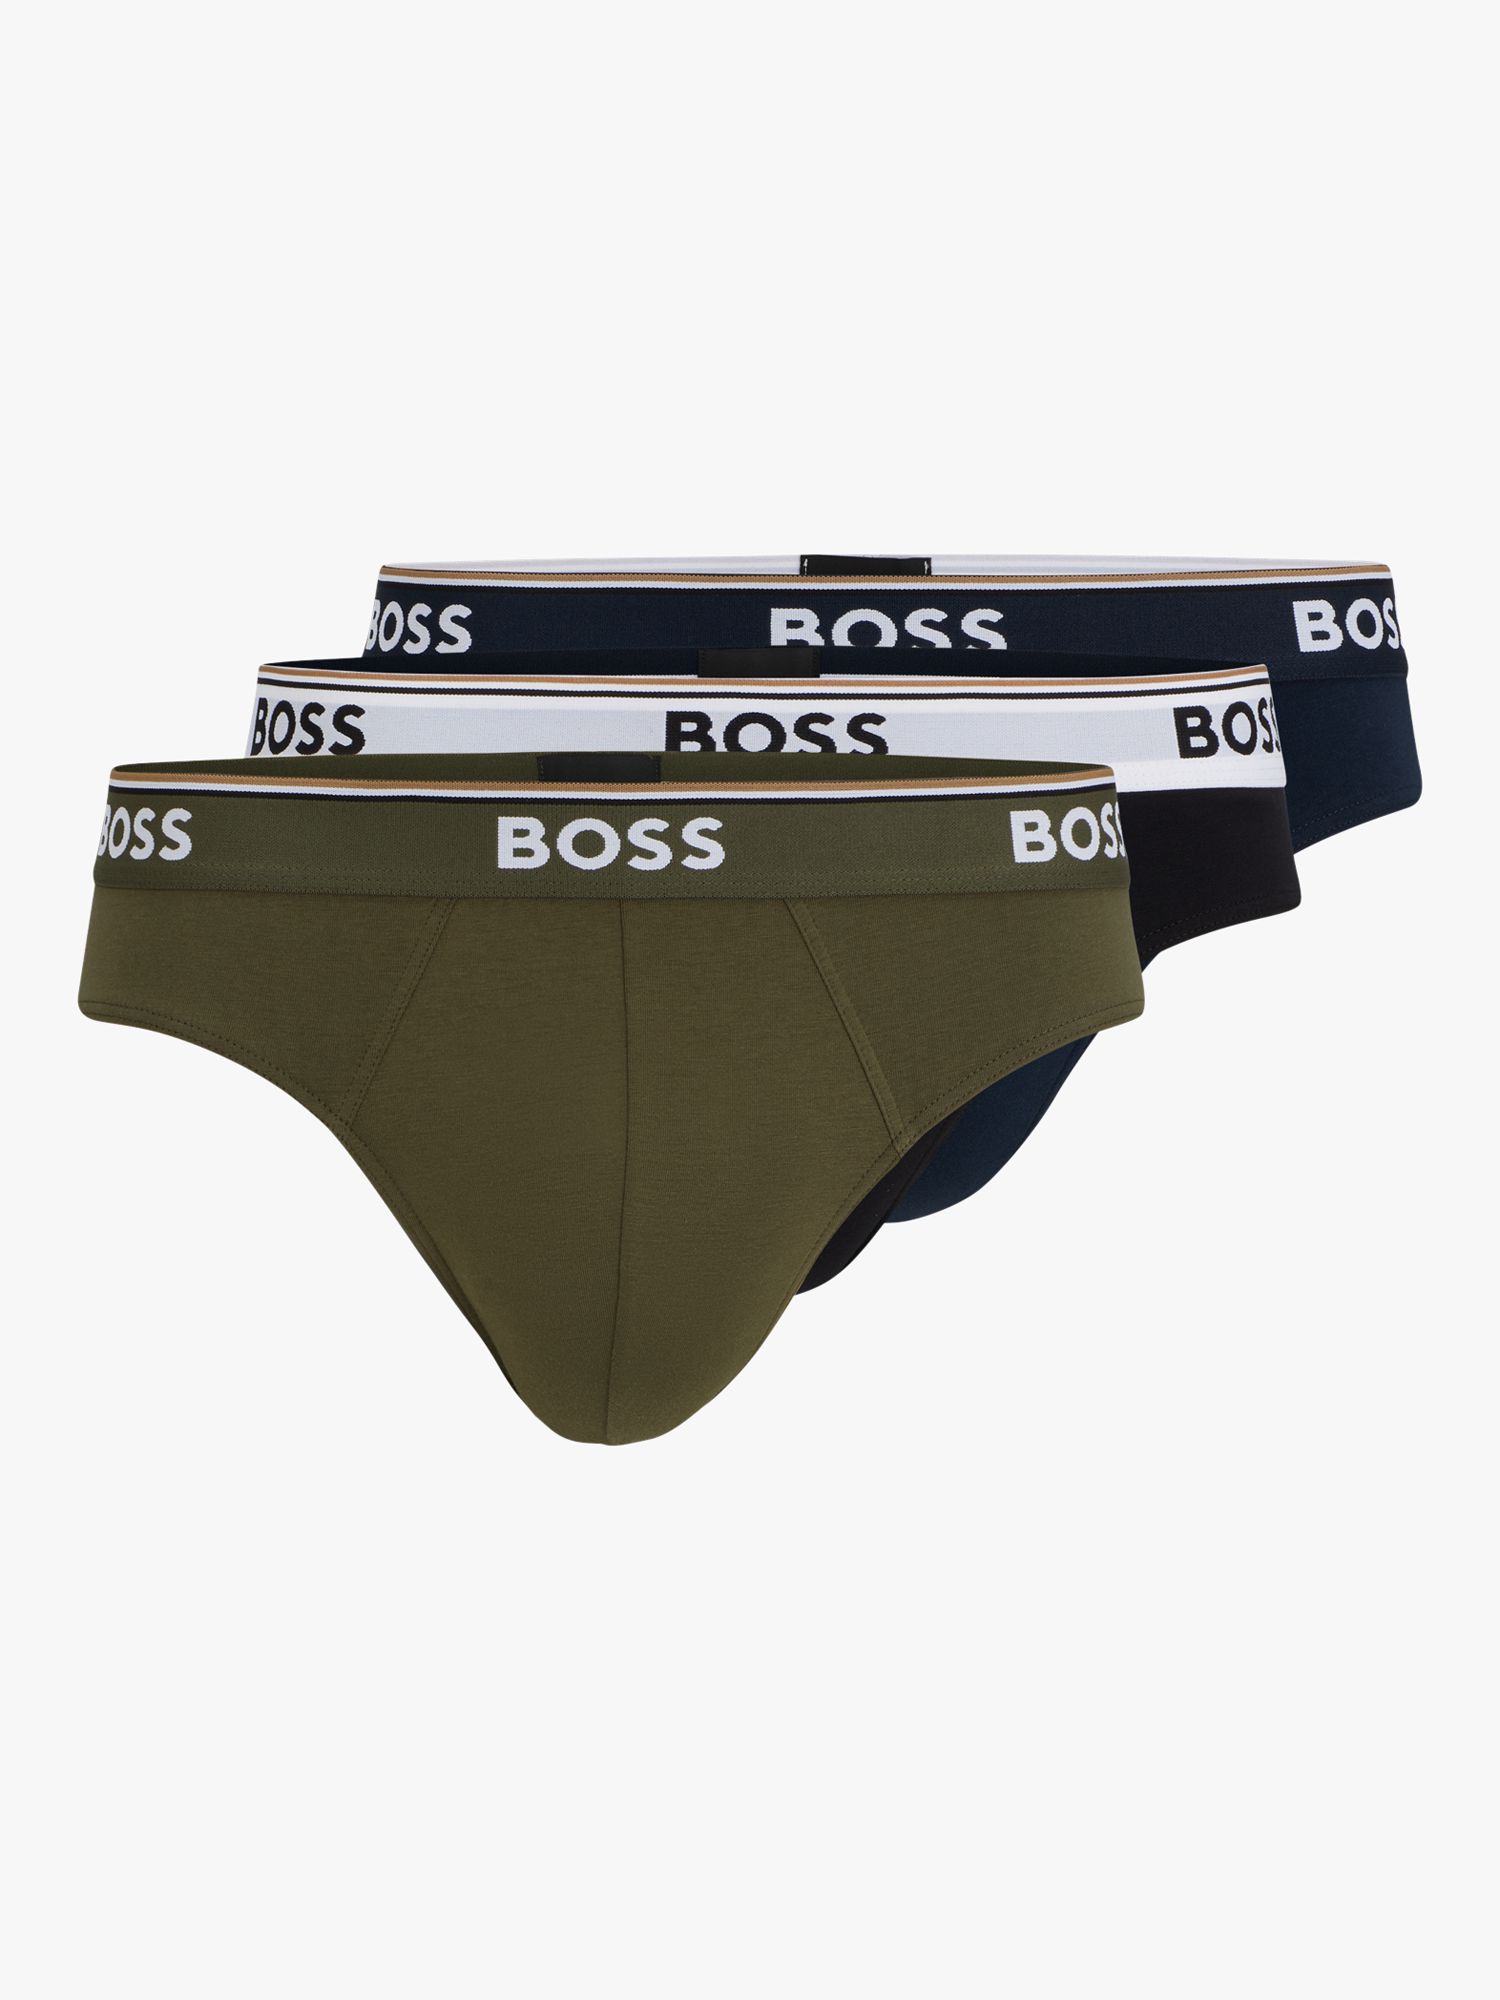 HUGO BOSS Men's Underwear